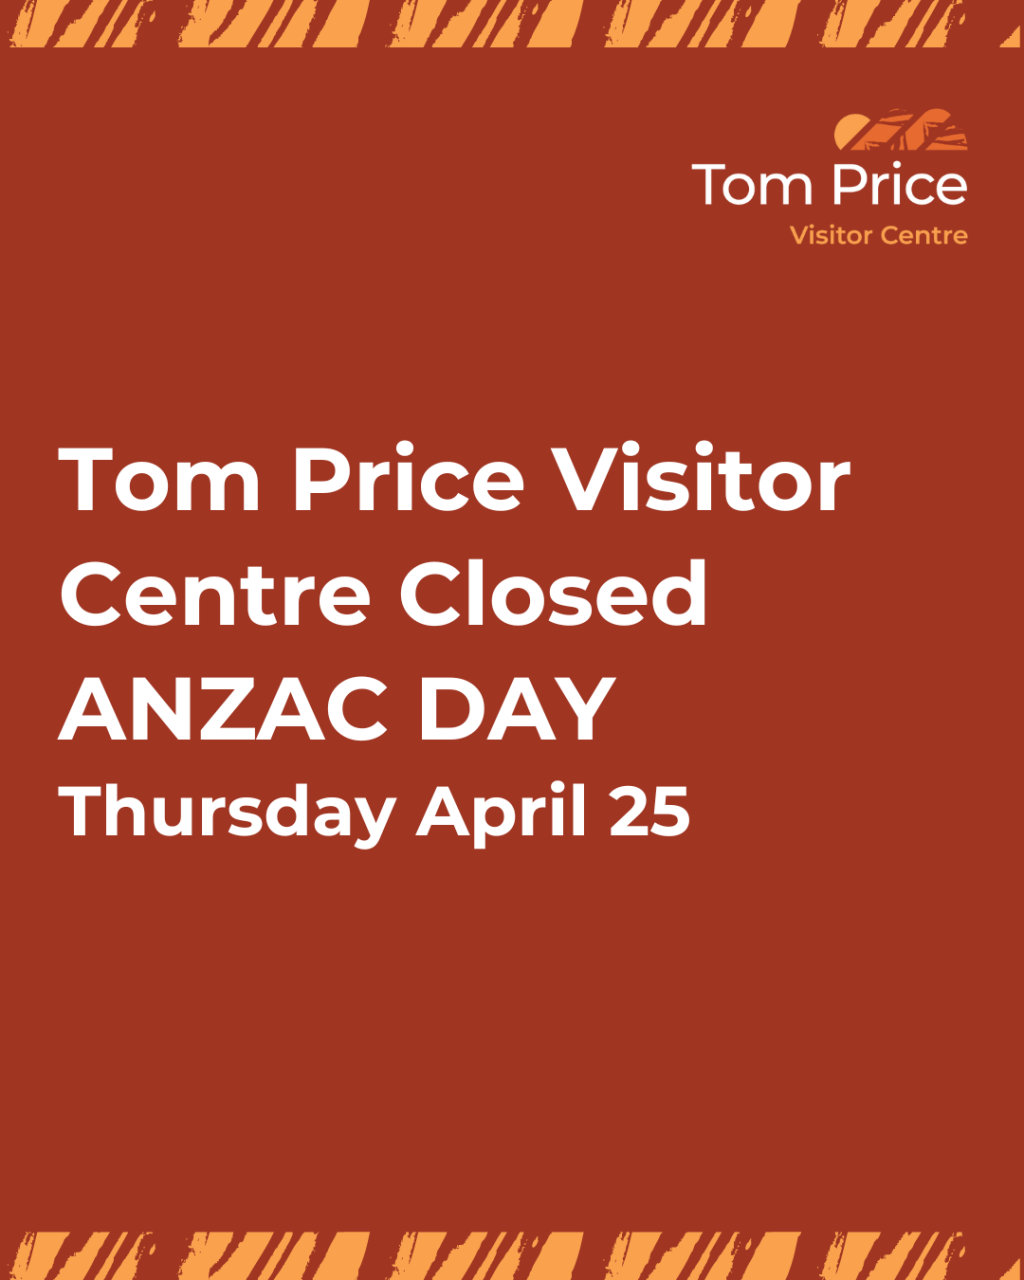 Tom Price Visitor Centre closed ANZAC Day